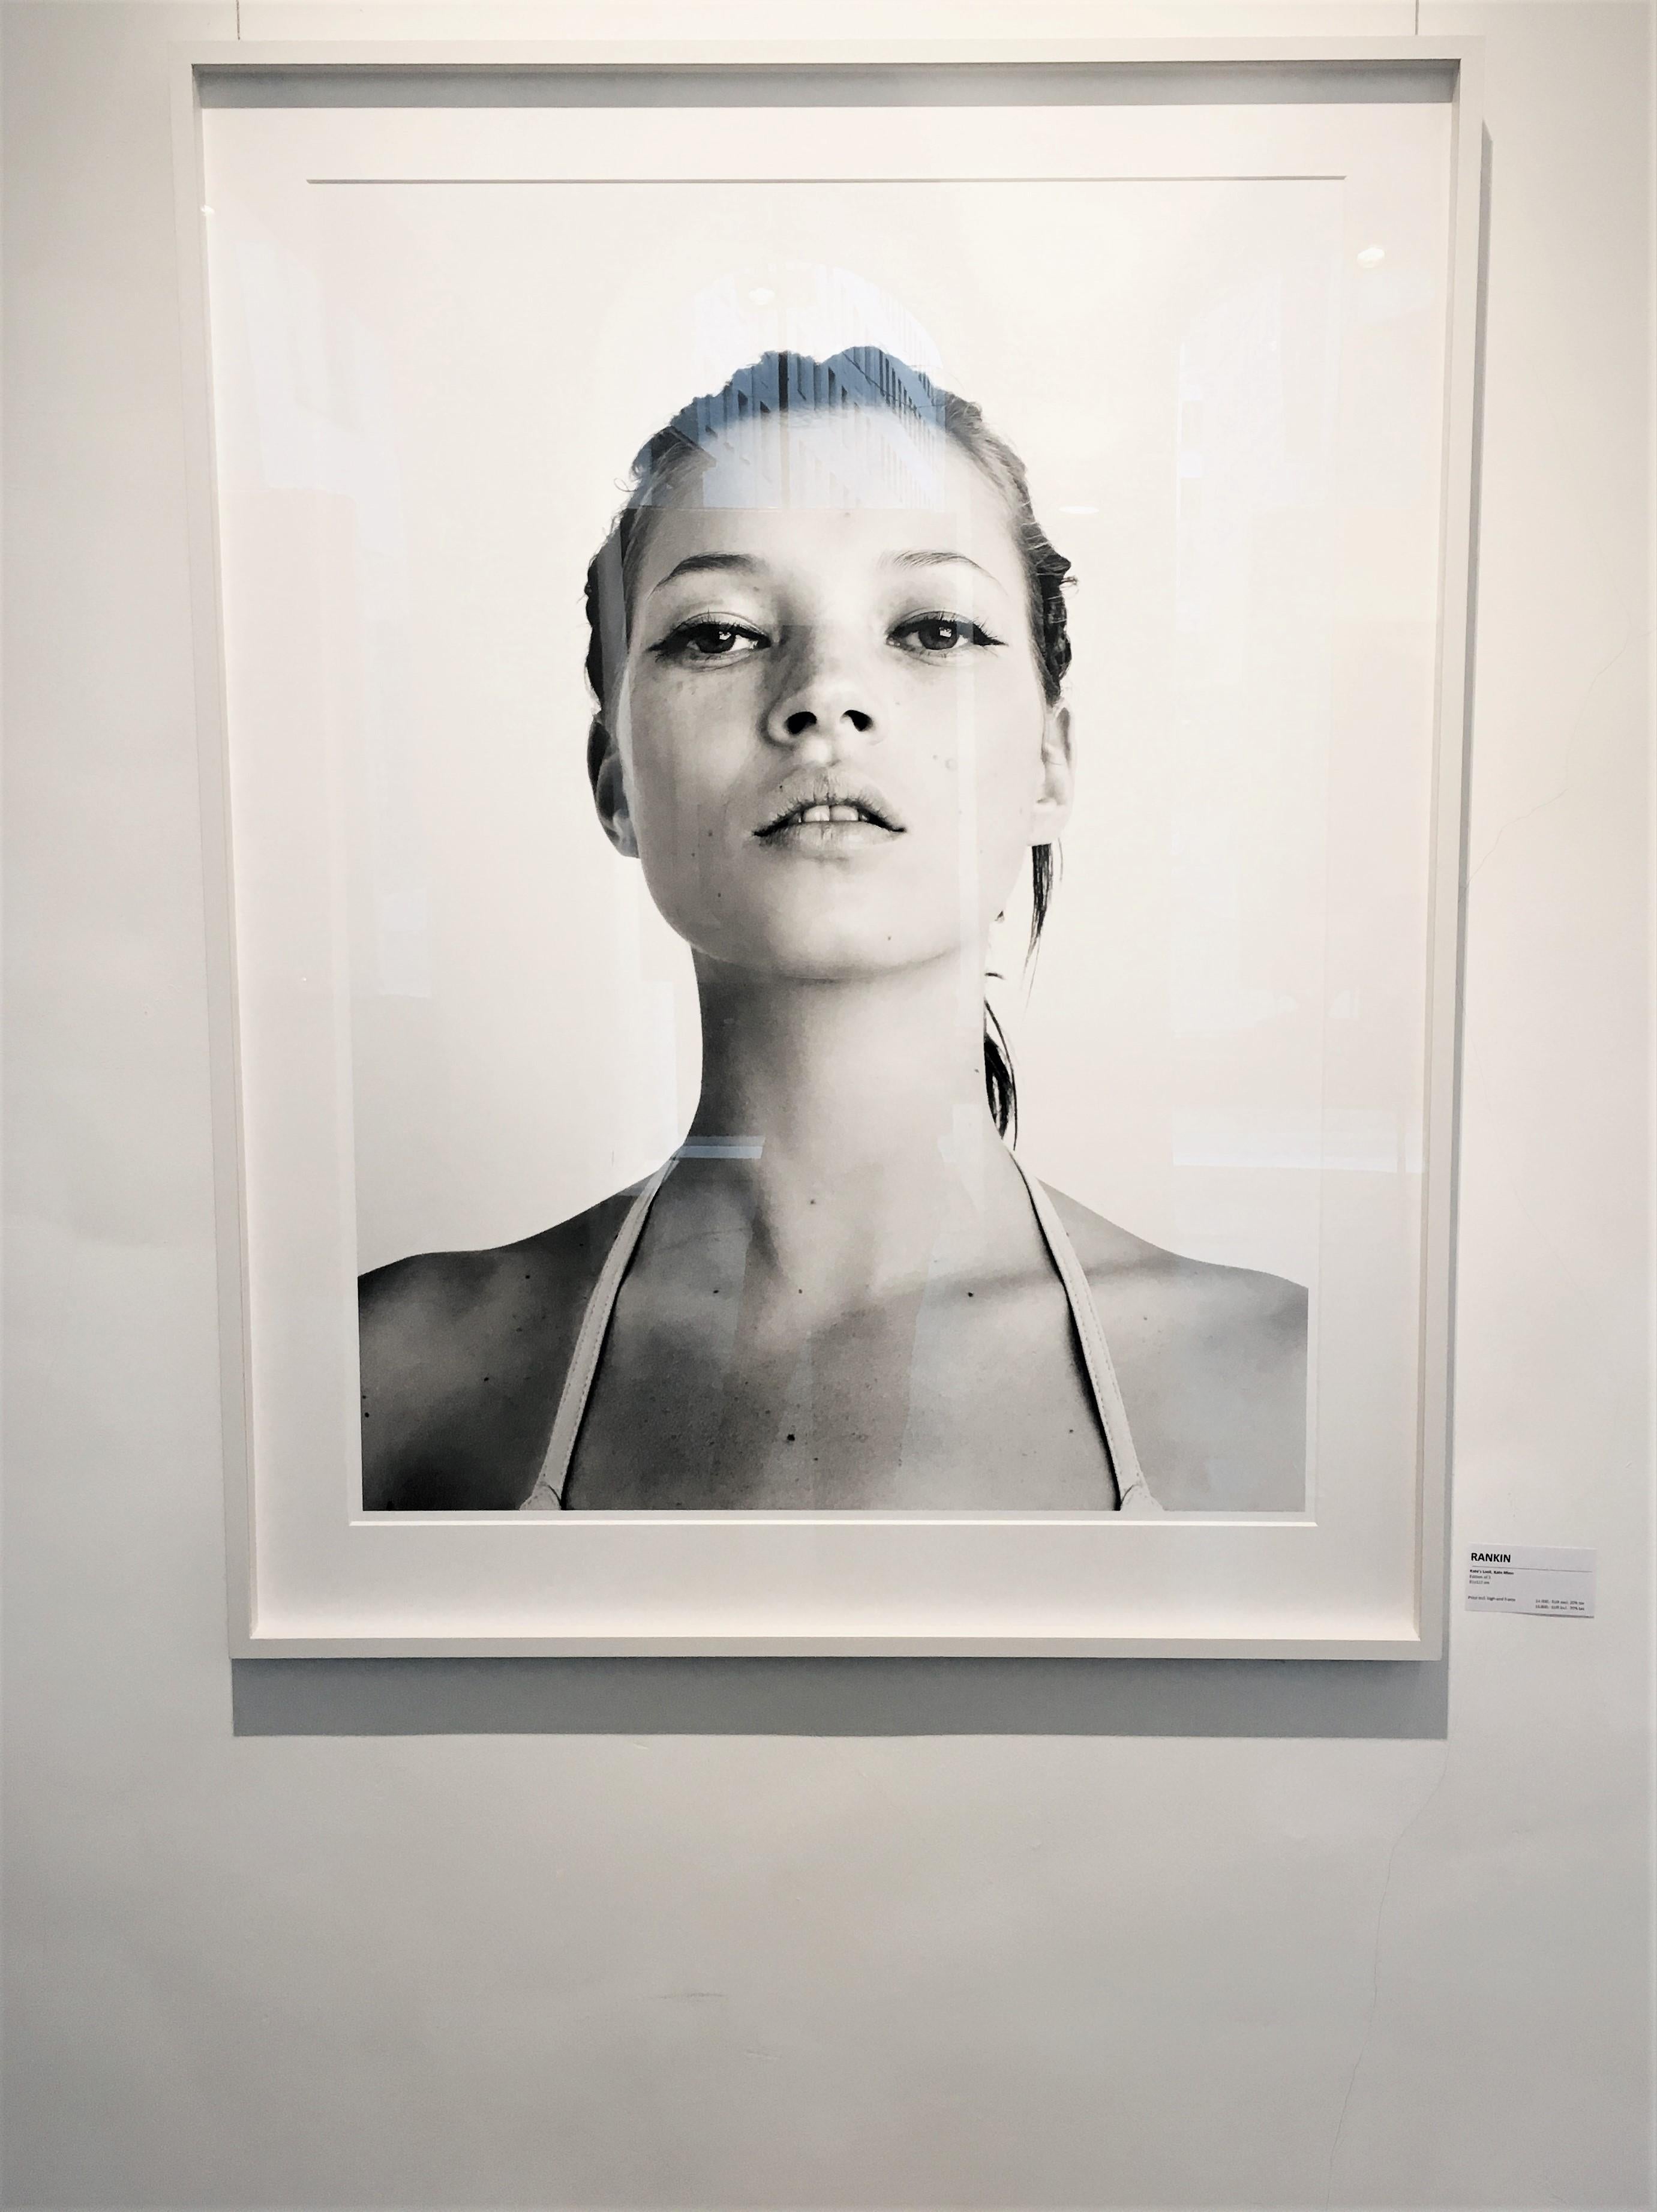 Kate's Look – Porträt der Supermodel Kate Moss, Kunstfotografie, 1998 – Photograph von Rankin